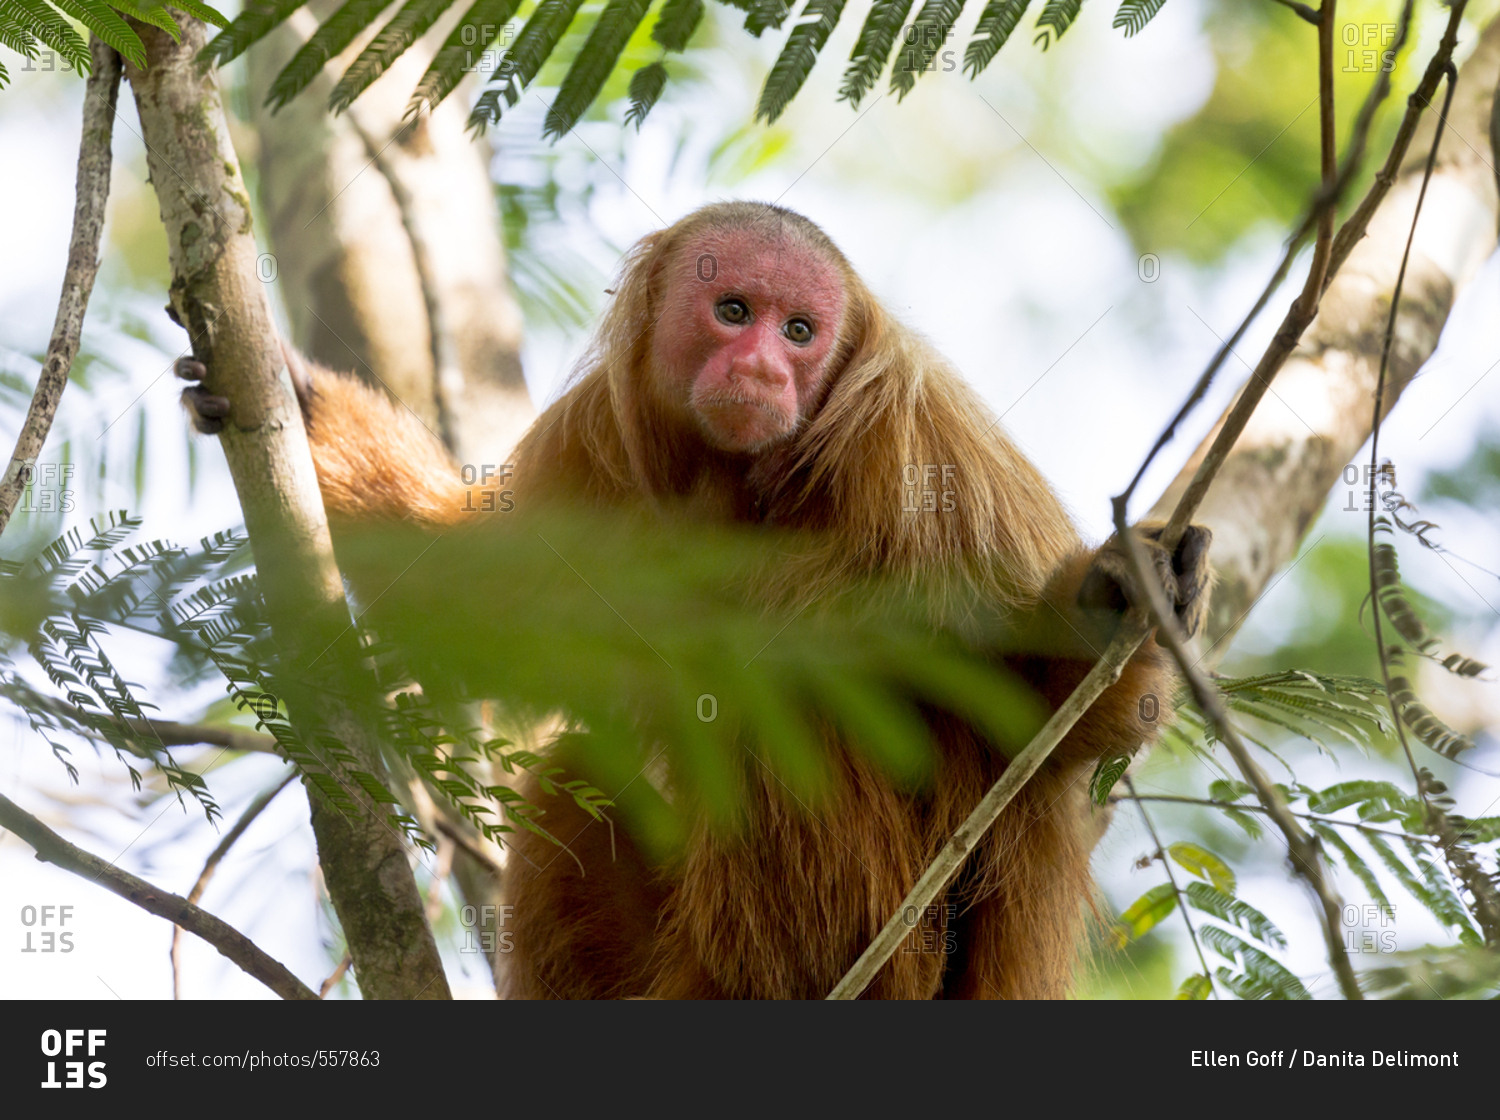 South America, Brazil, Amazon, Manaus, Amazon EcoPark Jungle Lodge, Portrait of a bald uakari monkey in the trees.